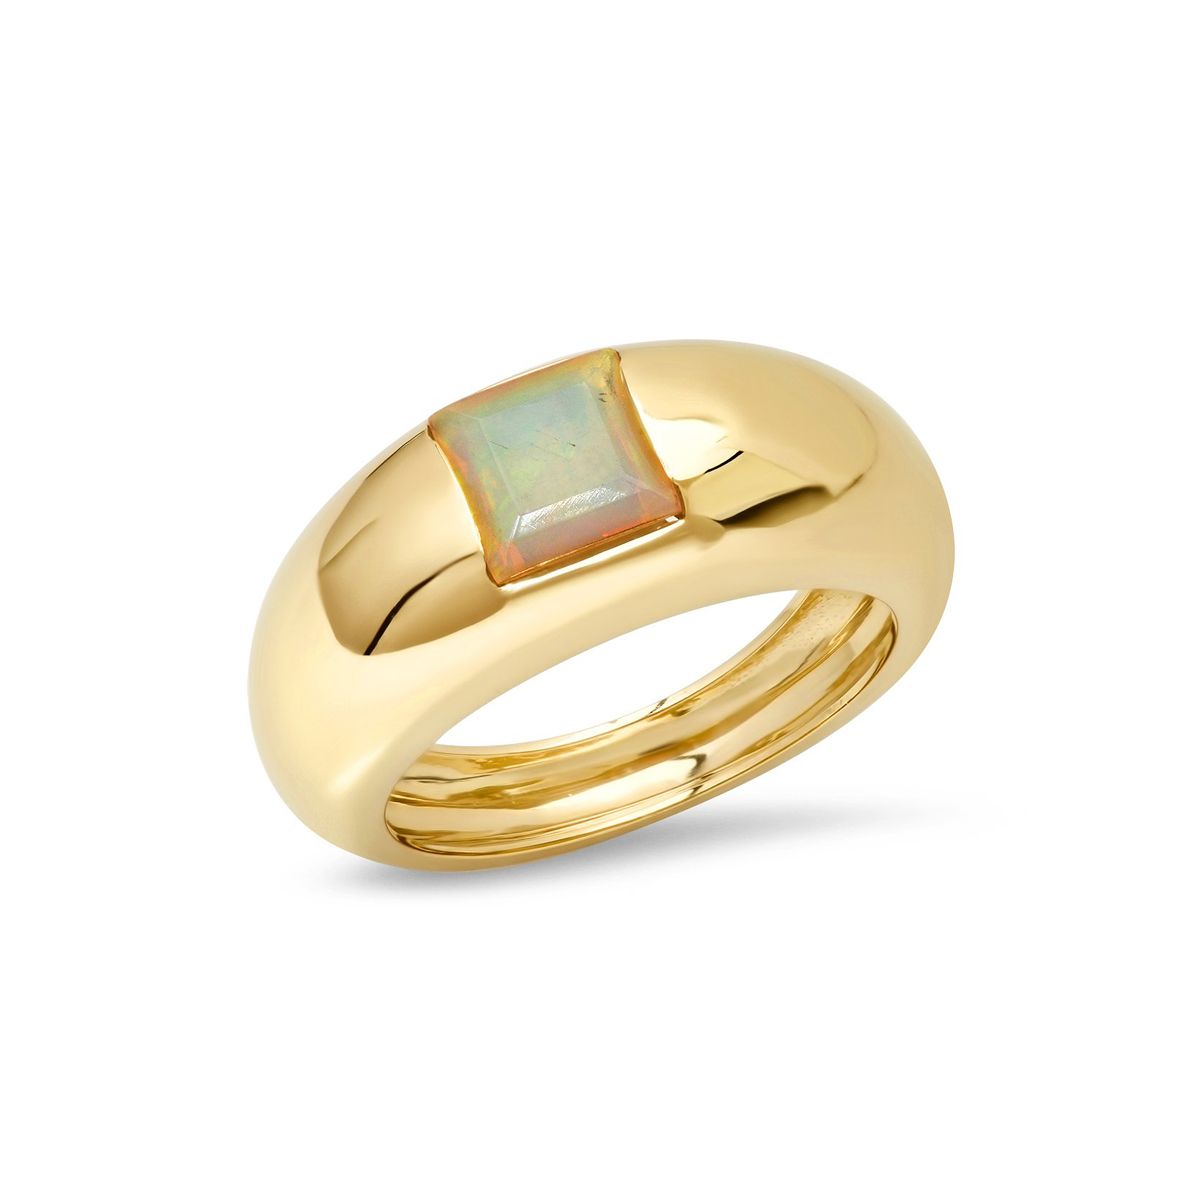 hbz opal engagement rings sig ward jewelry 1 1609345399.jpg?crop\u003d0